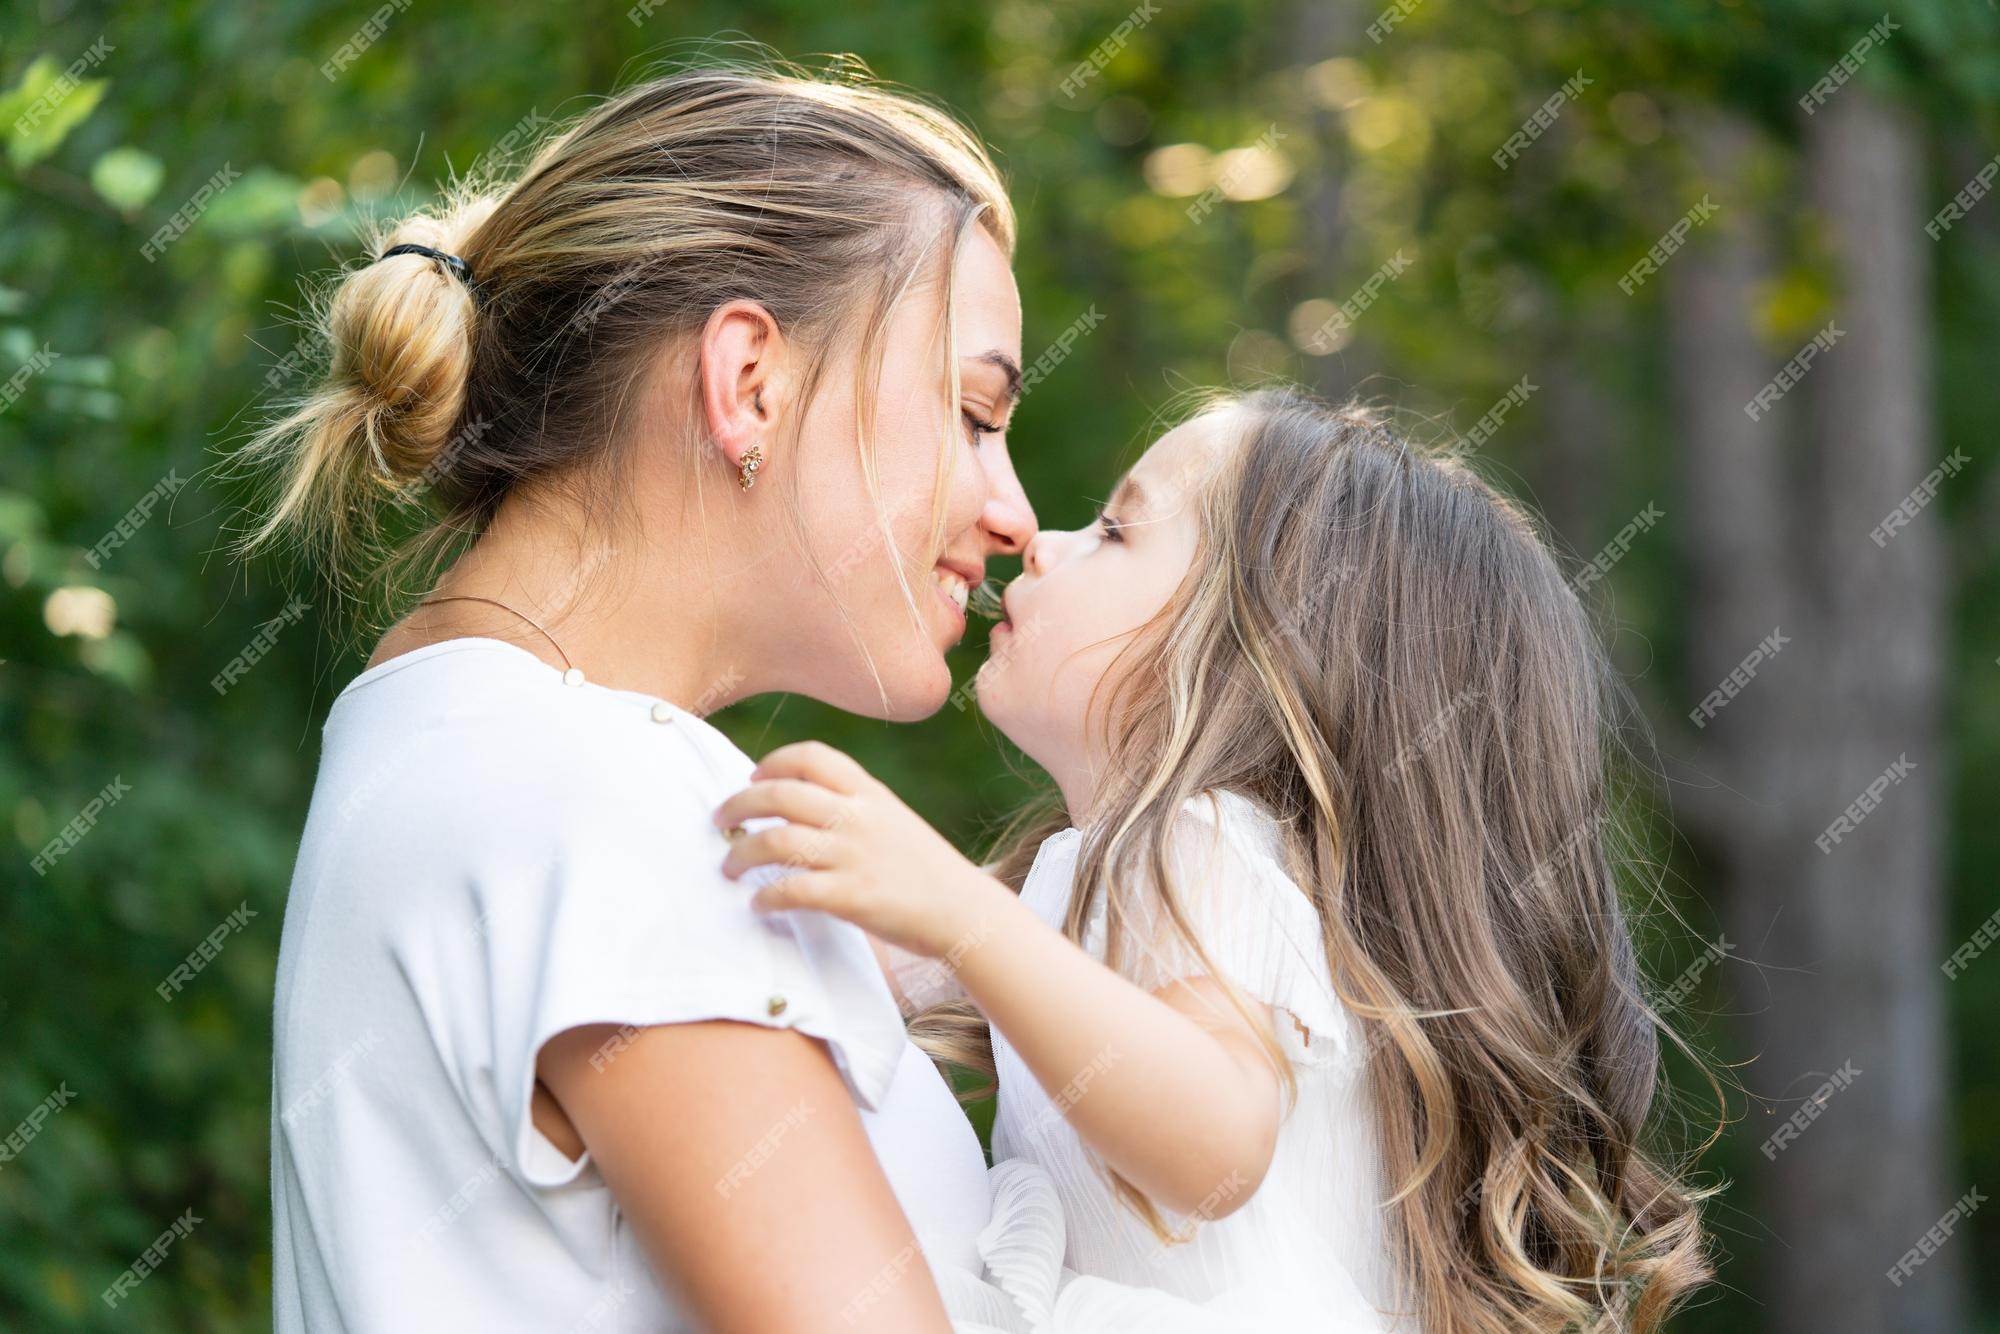 annamalai kumar recommends Moms Kissing Daughters